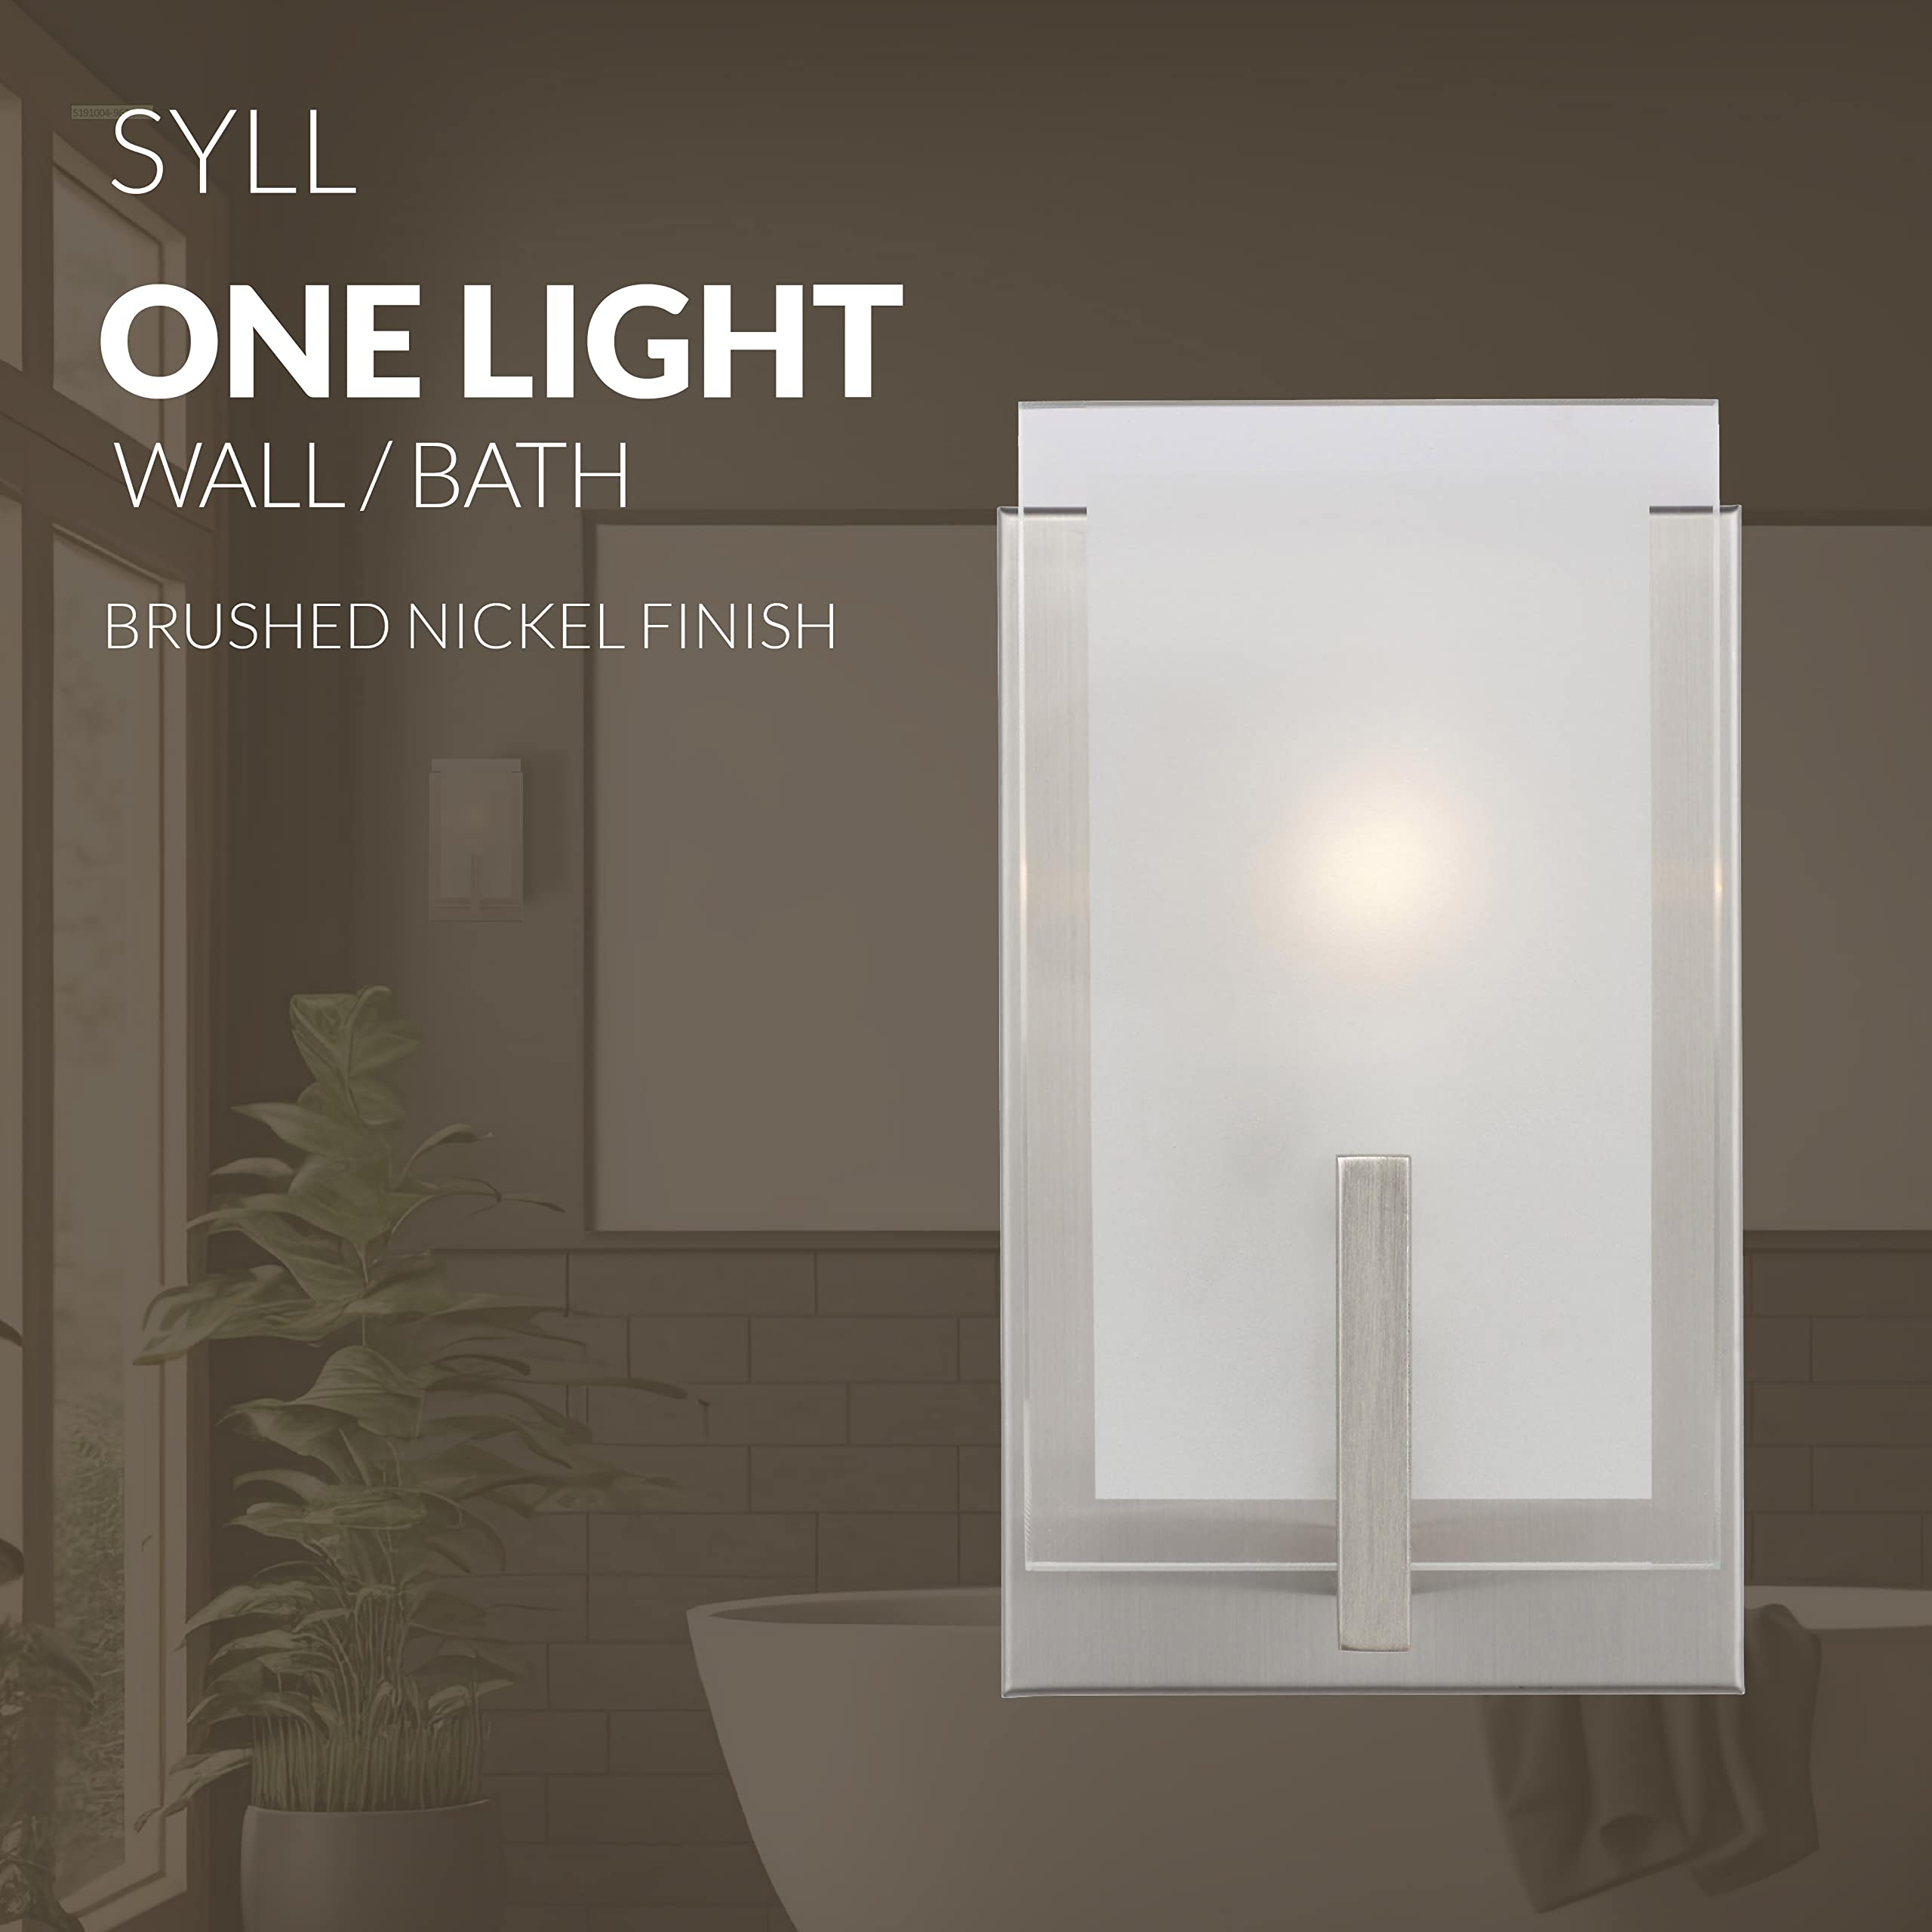 Generation Lighting 1-Light Syll Bath Fixture Wall Lamp (Brushed Nickel) 4130801-962 | Bathroom Light Fixture for Home Decor | Vanity Light Fixture Uses Candelabra E12 Standard or LED Light Bulbs